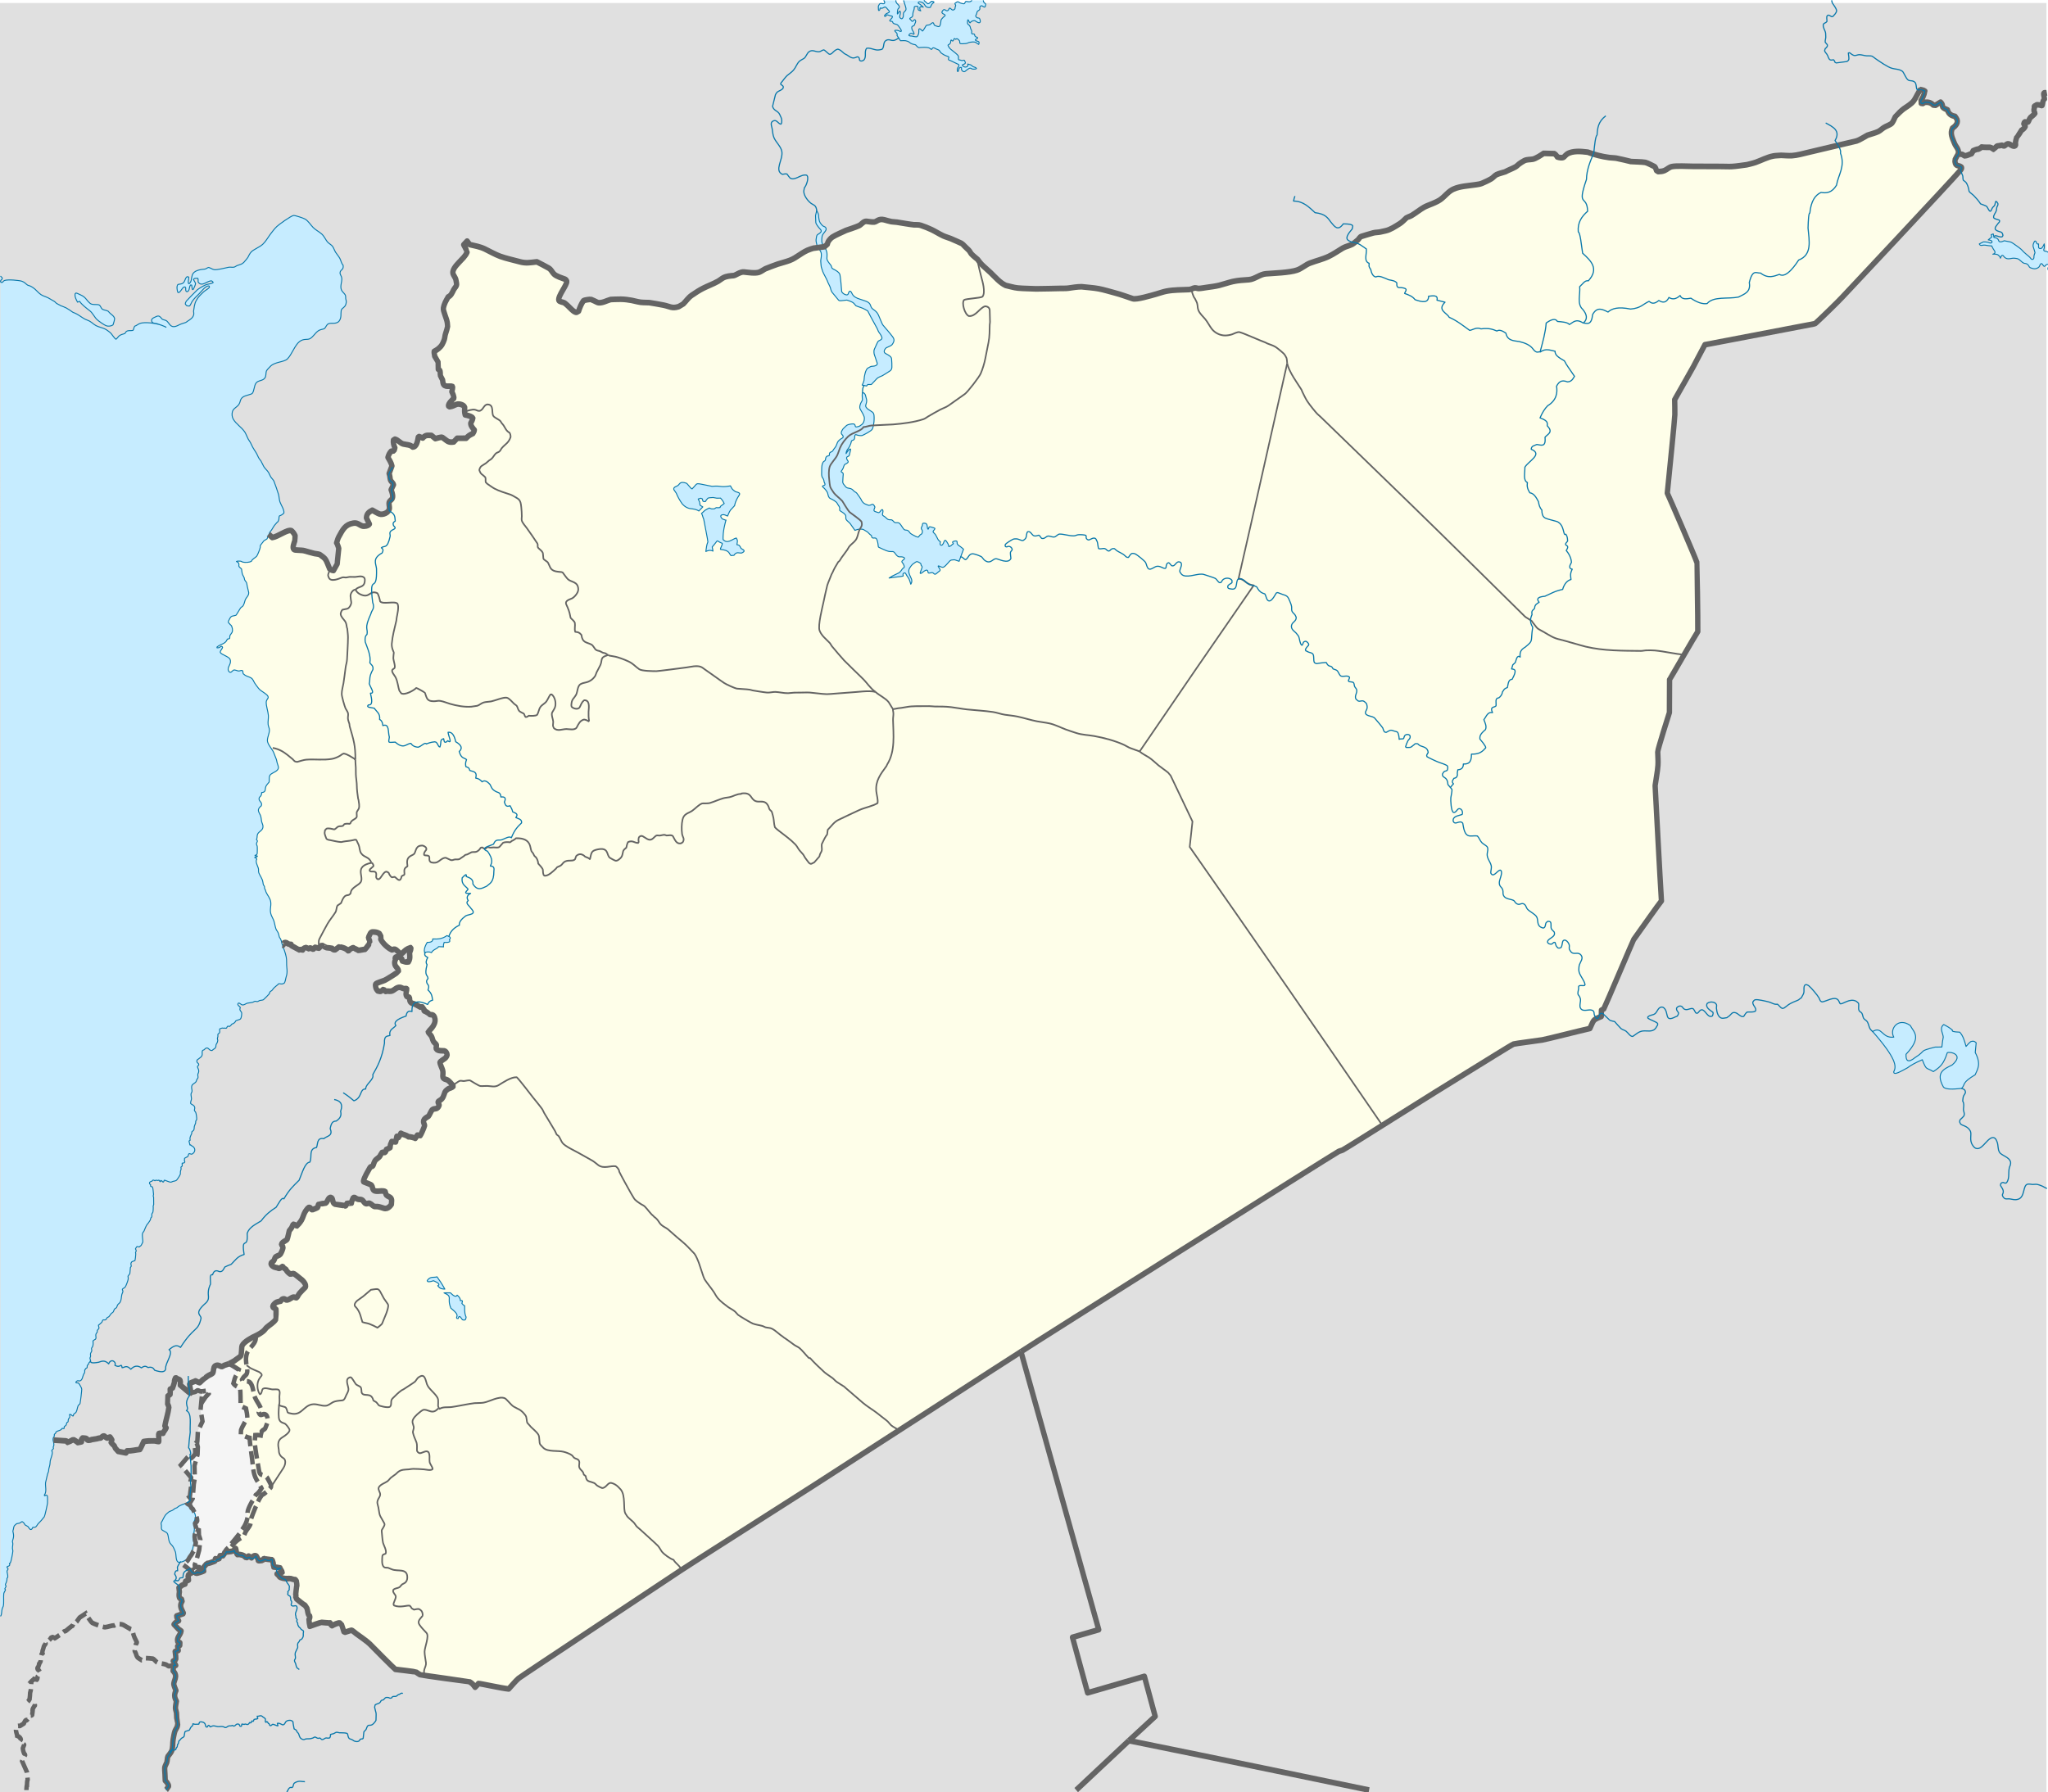 Lothar von Richthofen/Template:Syrian civil war detailed map is located in Syria